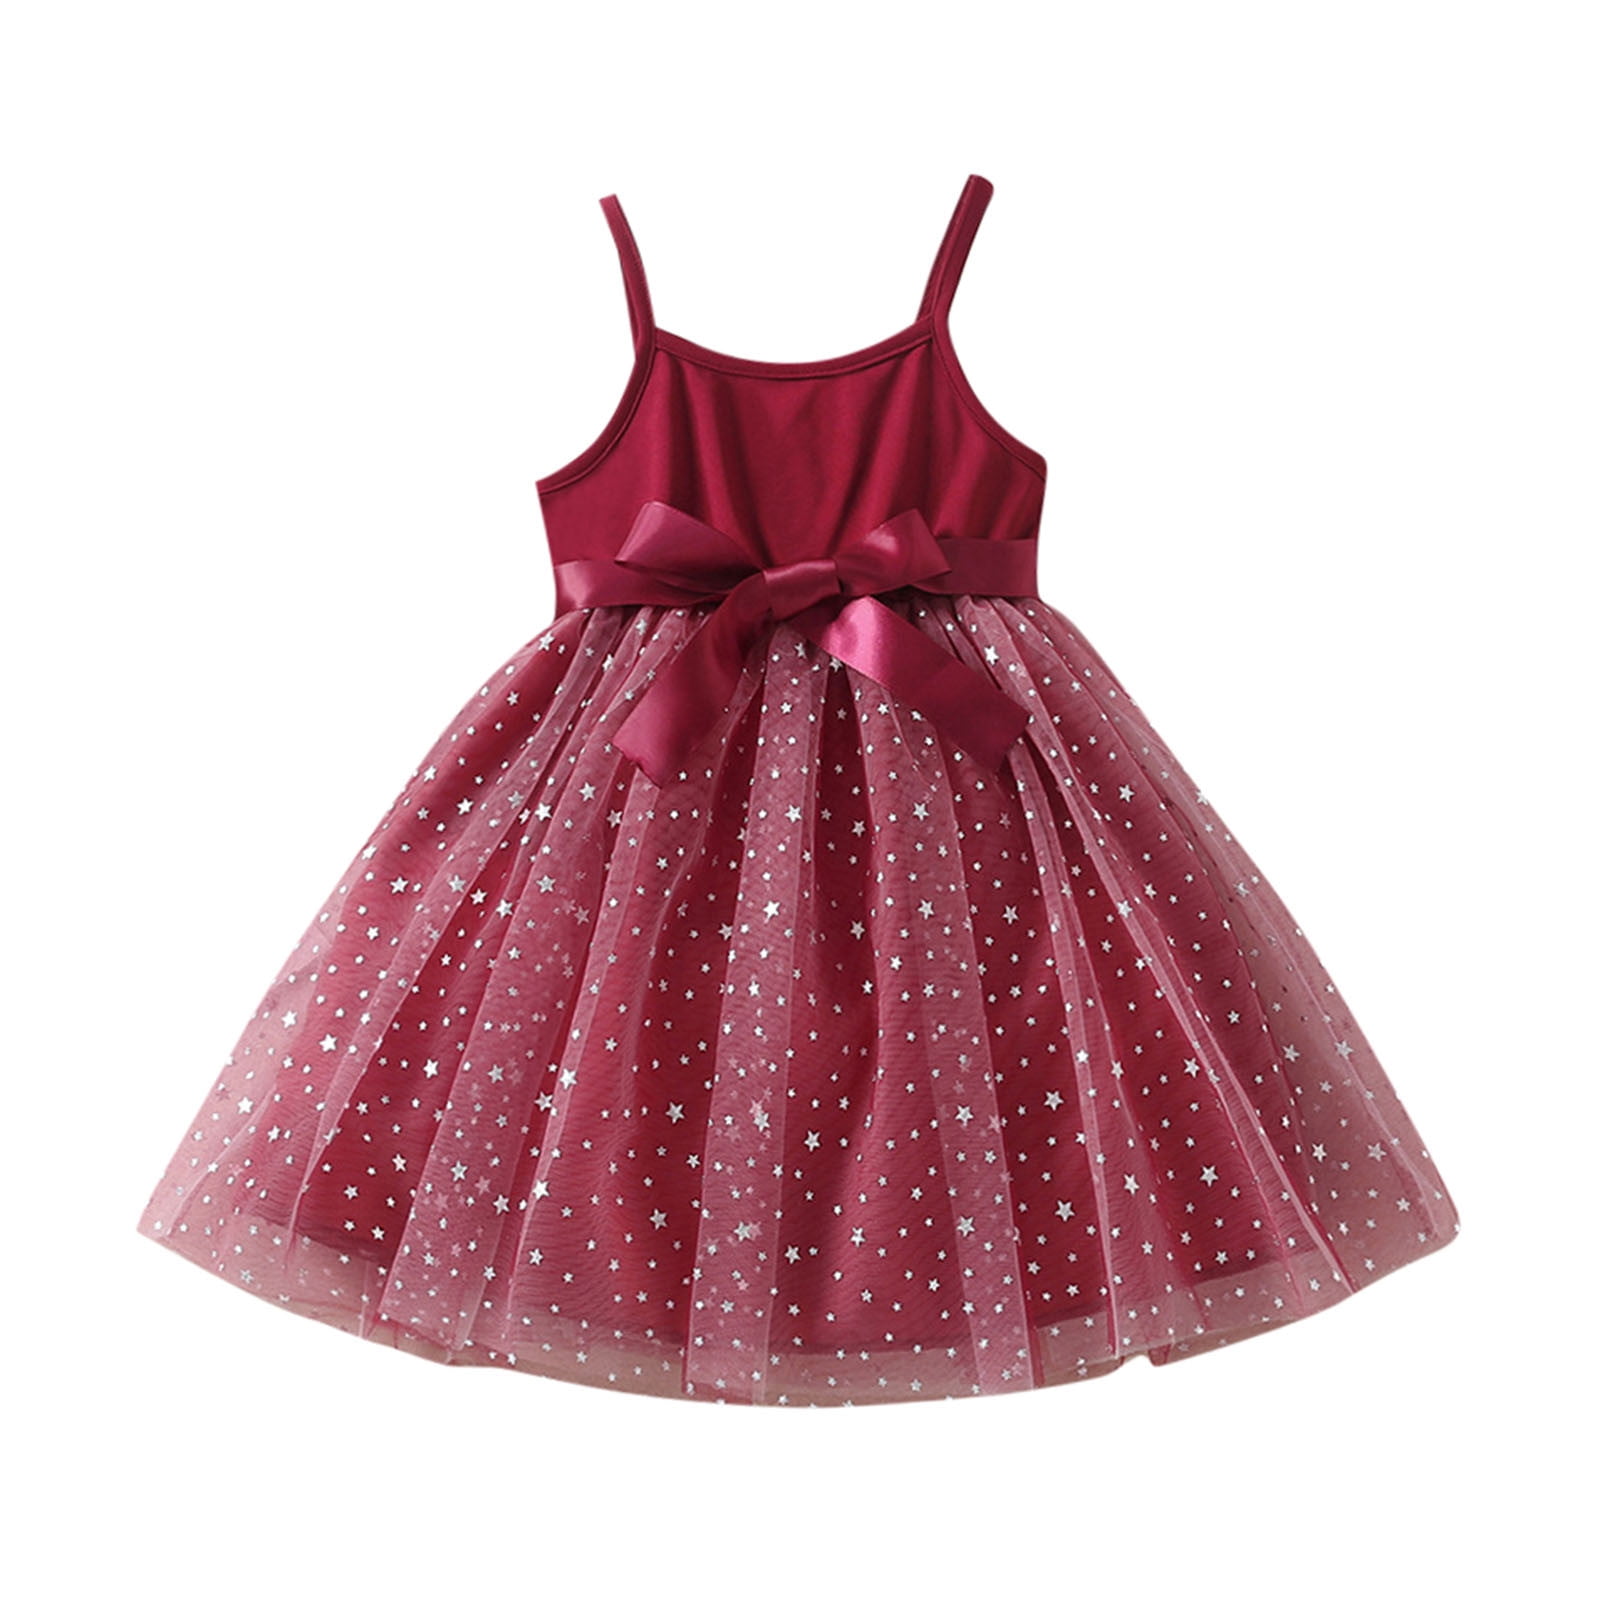 ZHAGHMIN Tween Dresses for Girls Size 14-16 Kids Toddler Girls